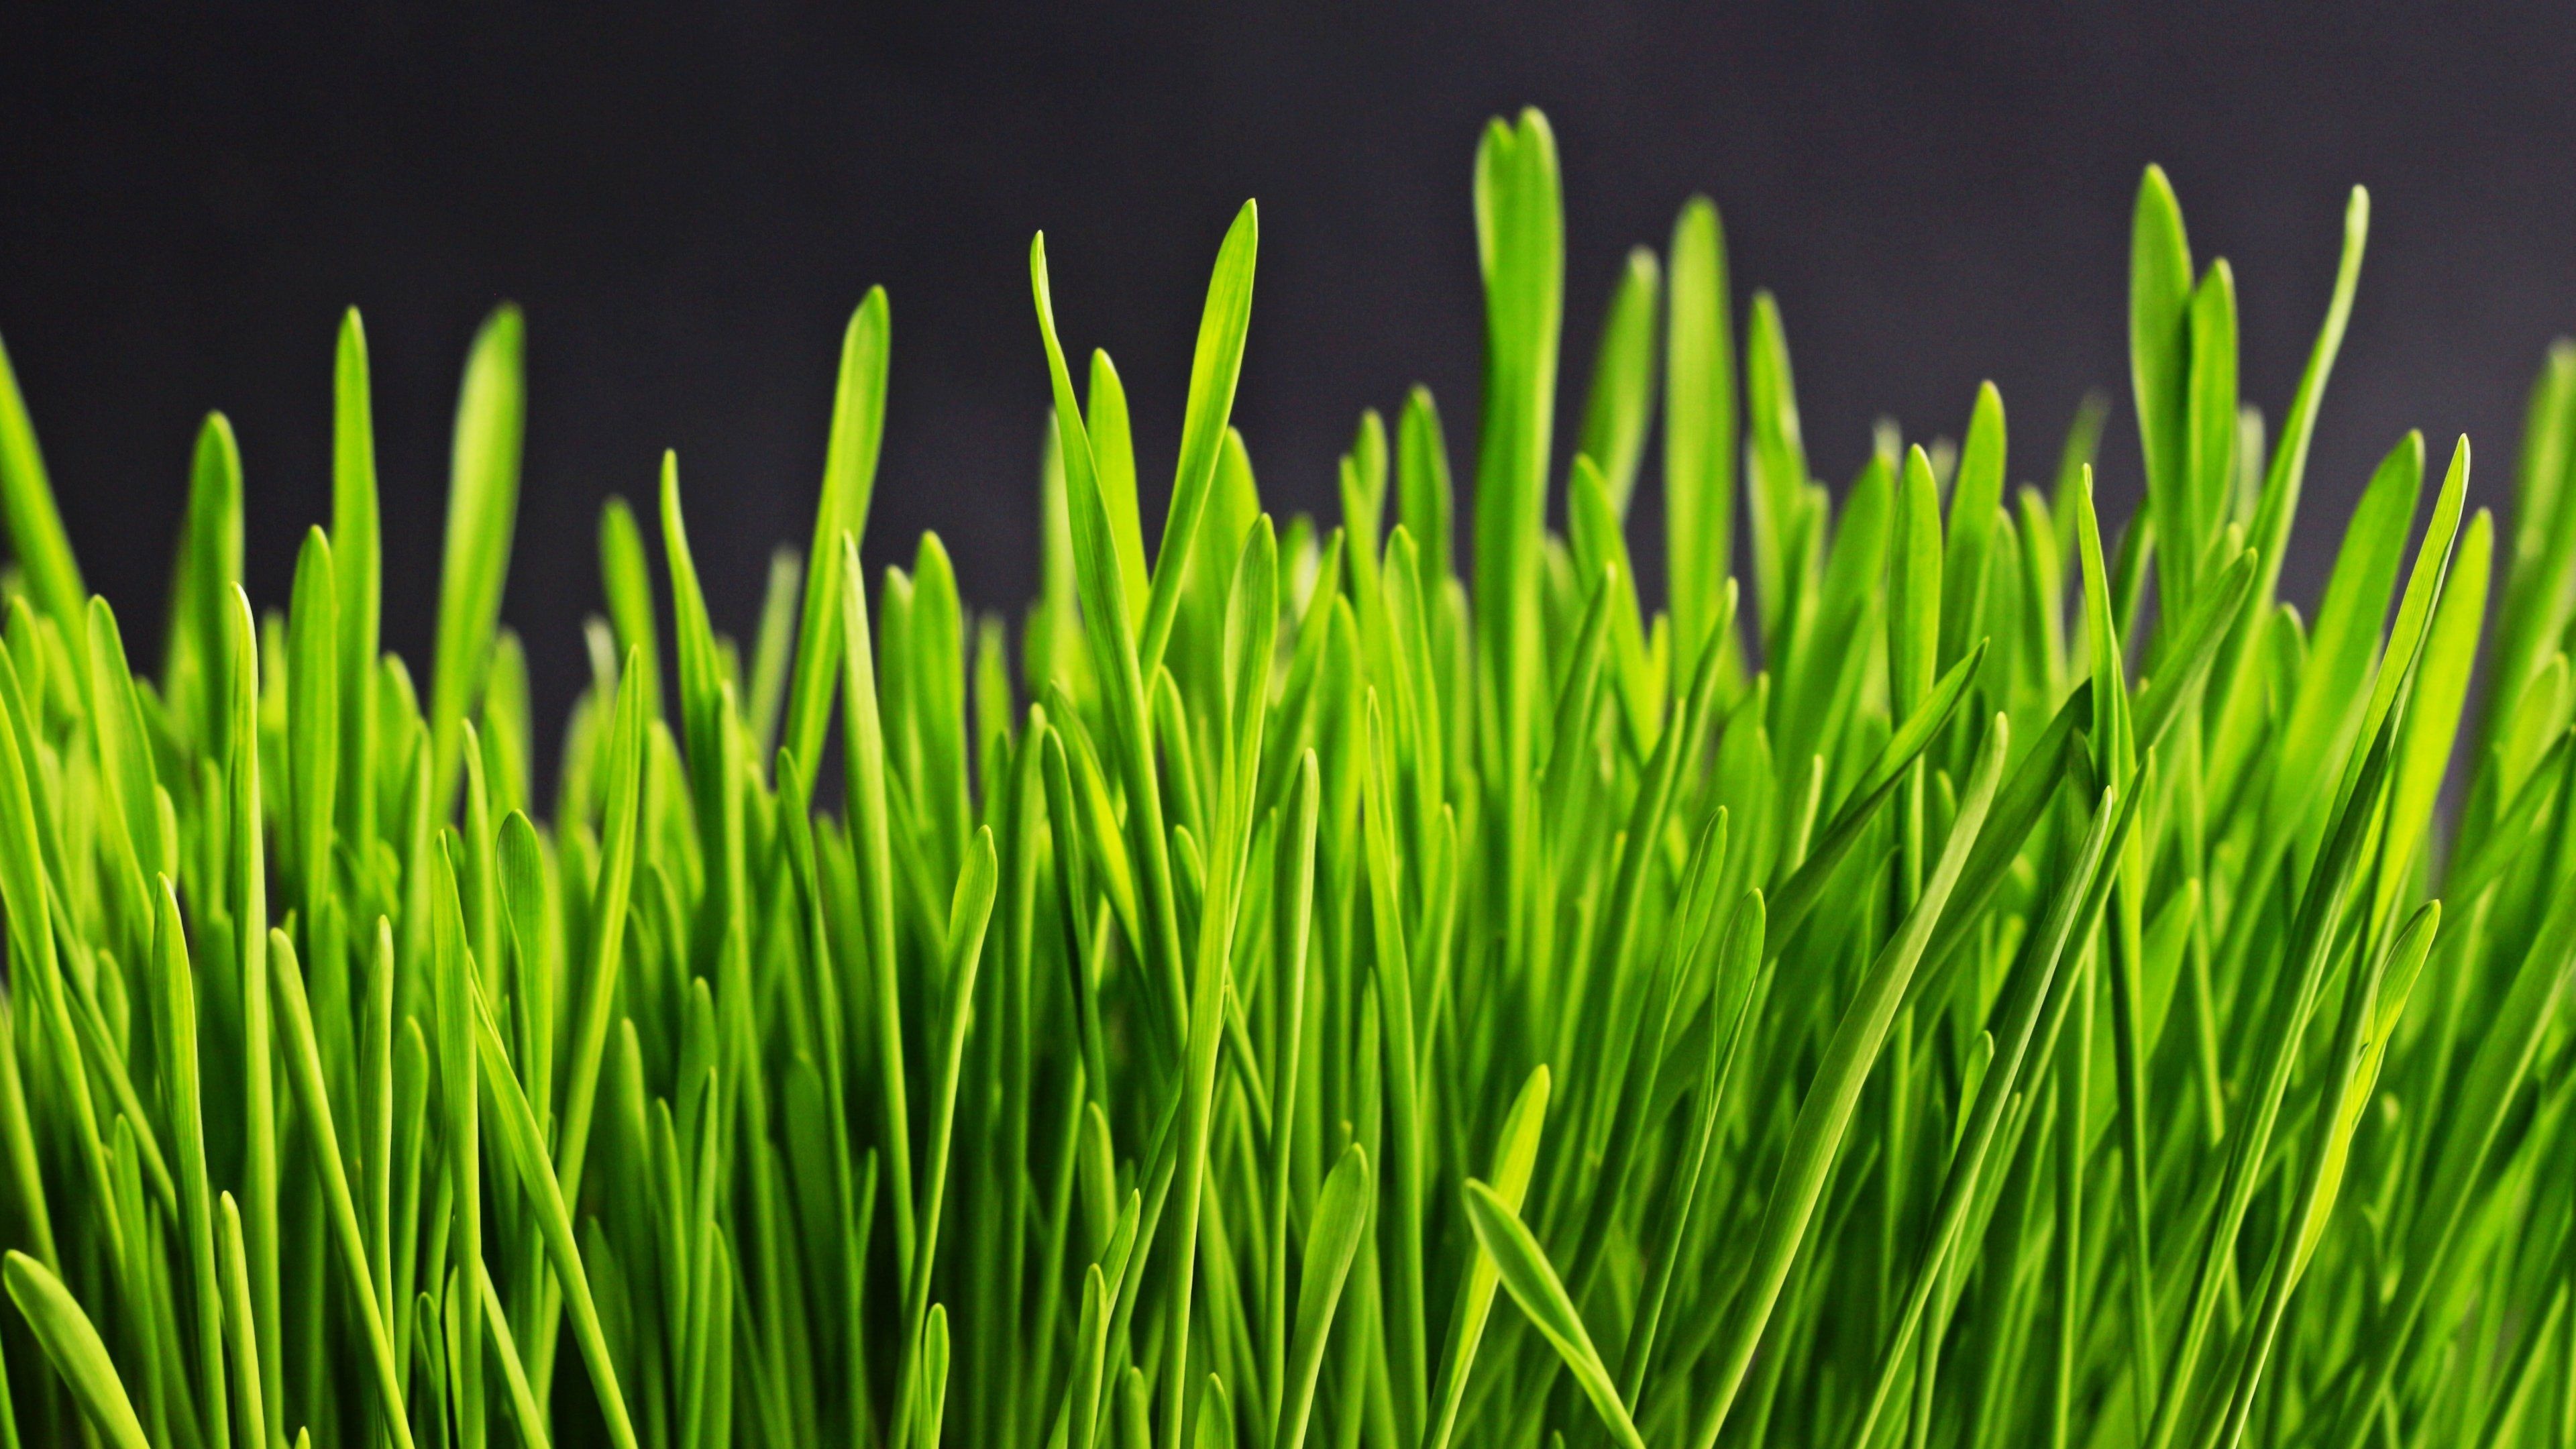 Aesthetic grass desktop wallpapers, Green nature, Serene landscapes, Vibrant greens, 3840x2160 4K Desktop